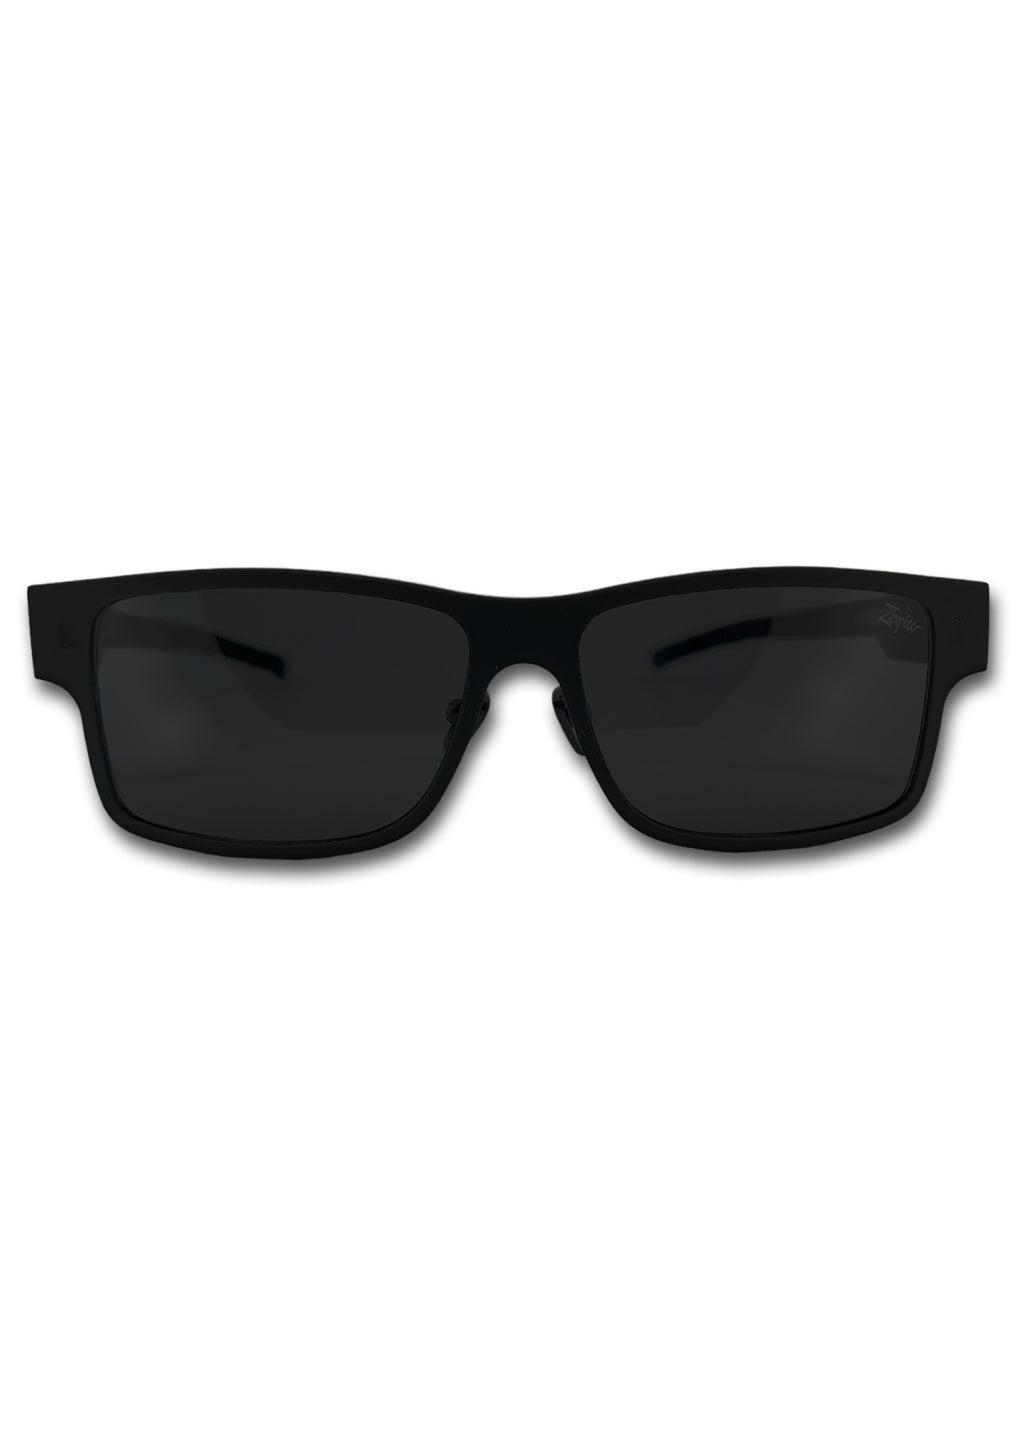 ReVision Square - Eco-Friendly Recyclable Paper Sunglasses-1